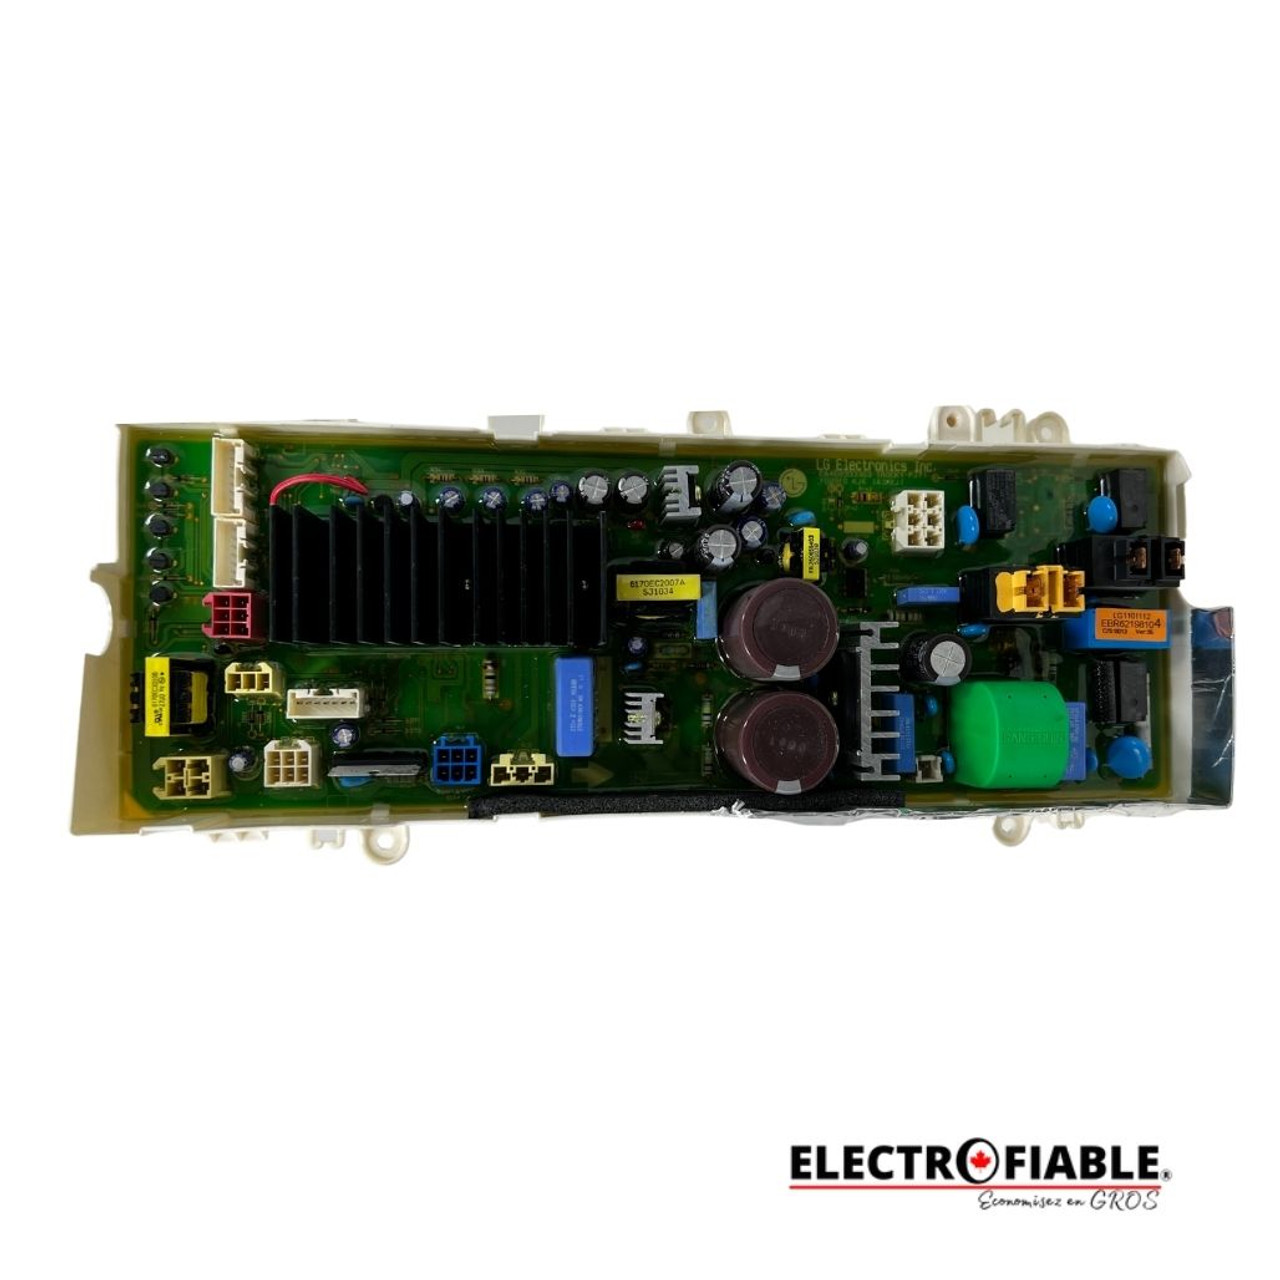 EBR62198104 Main PCB For LG Washer WT5001C, WT5001CW, WT5101HV